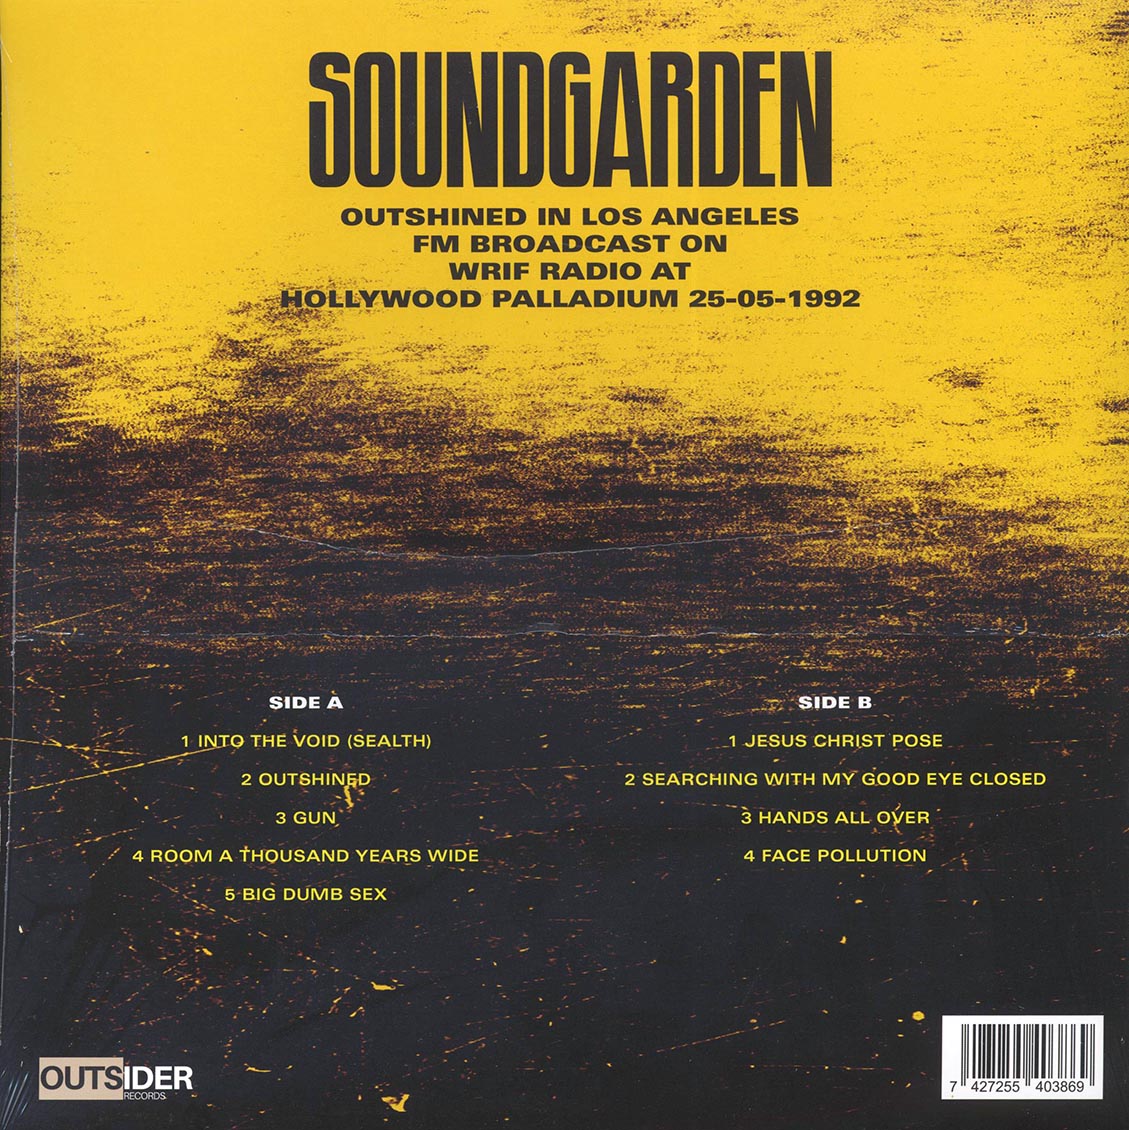 Soundgarden - Outshined In Los Angeles: Hollywood Palladium 25-05-1992 (ltd. ed.) (yellow vinyl) - Vinyl LP, LP